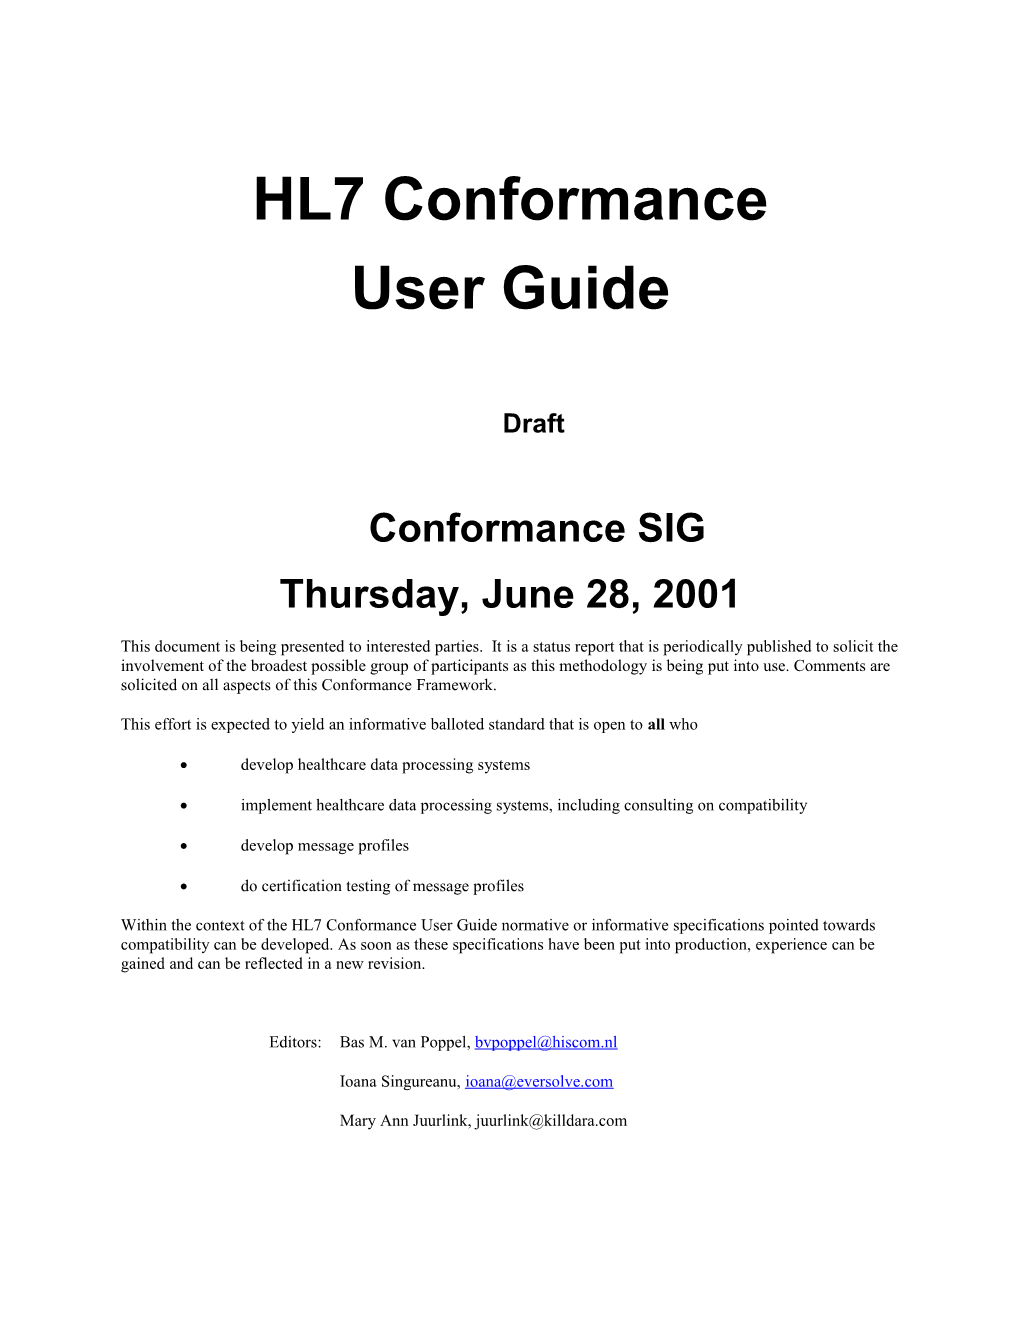 HL7 Conformance User Guide